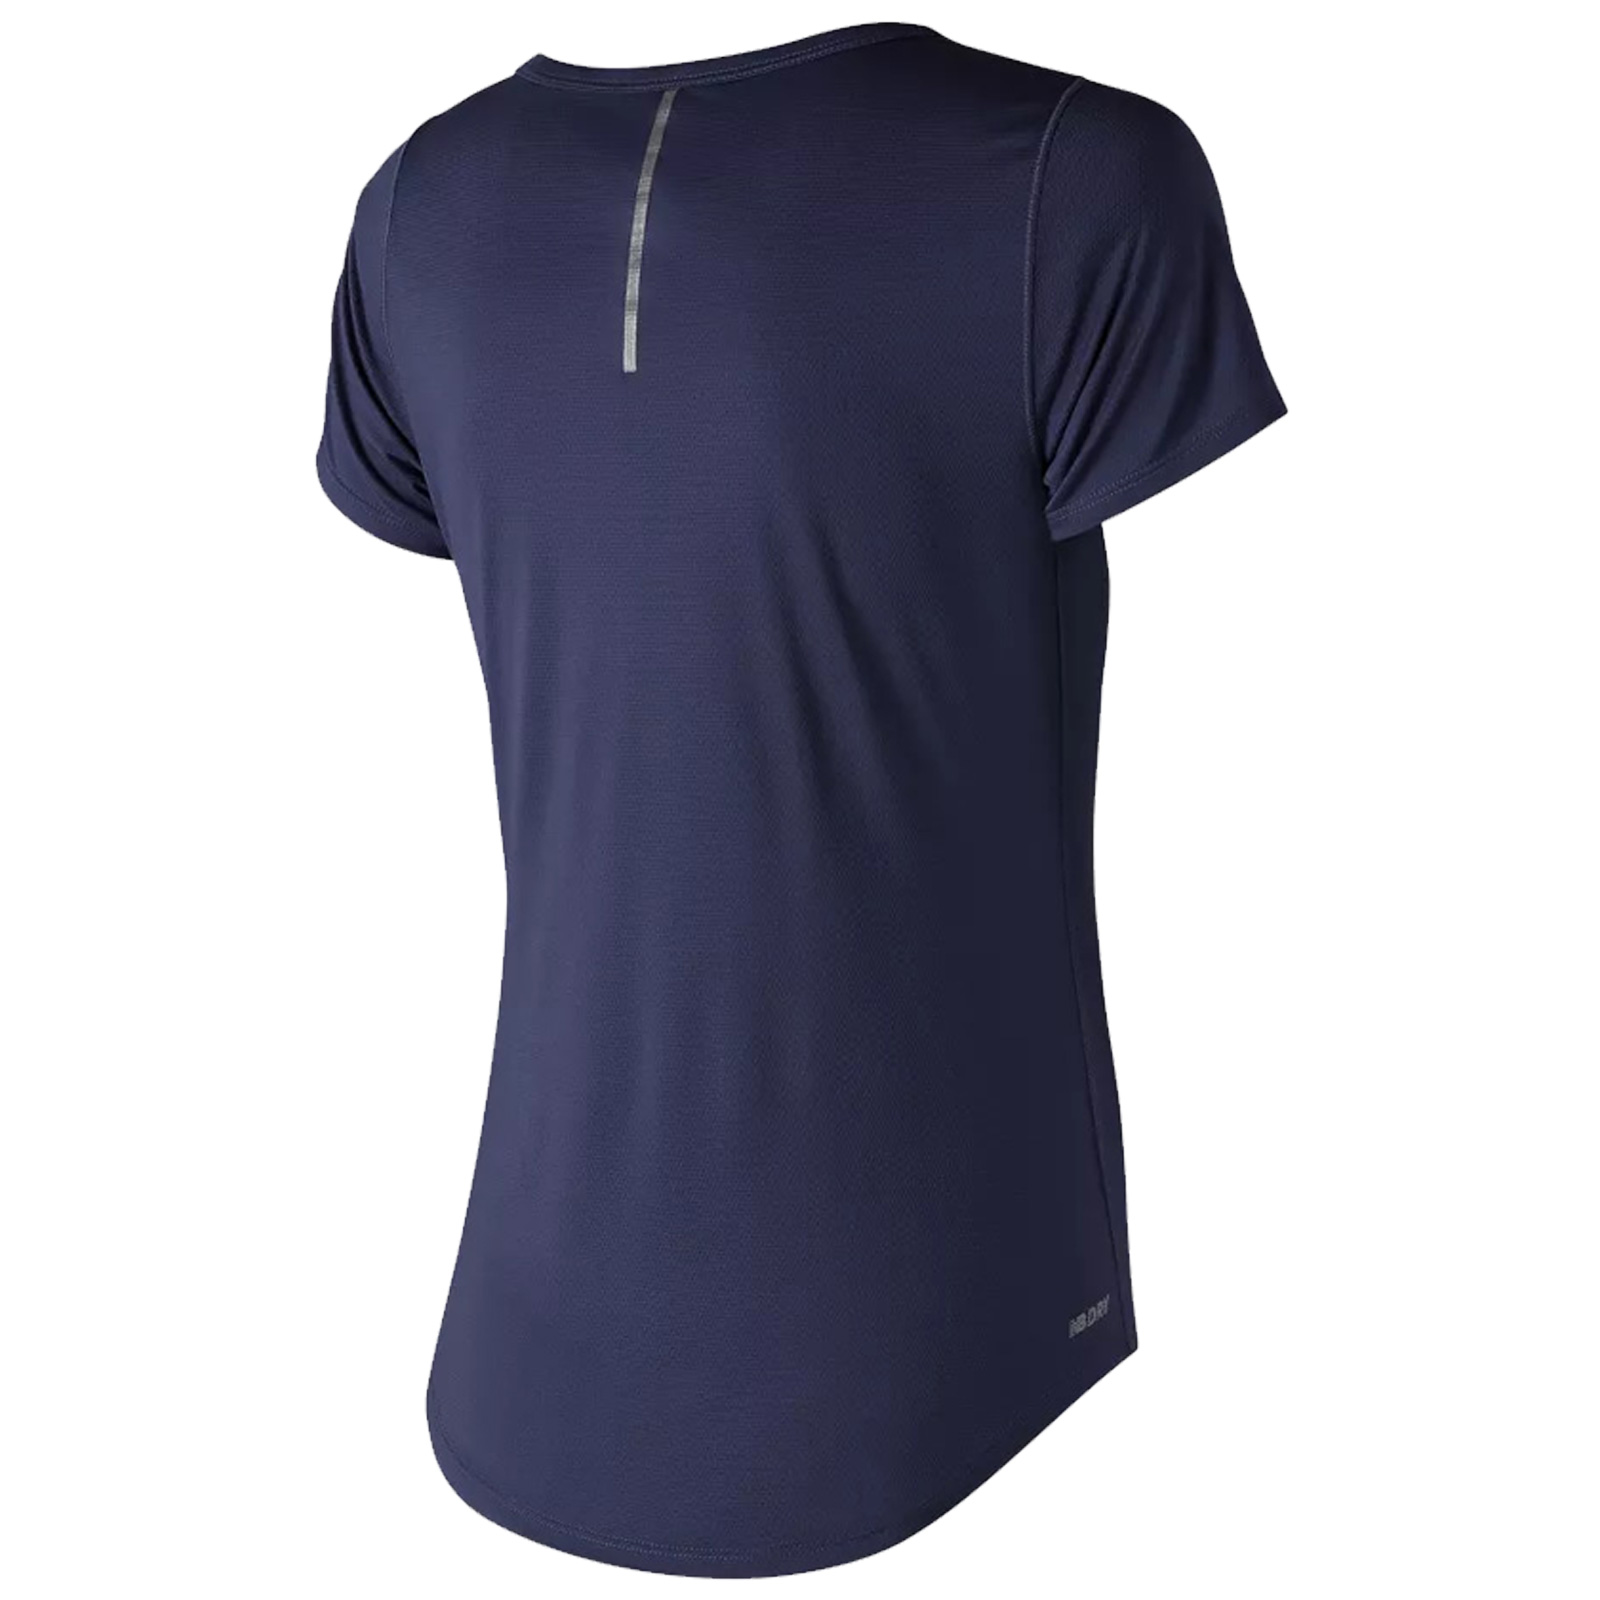 New Balance Ladies Accelerate V2 T-Shirt - Gym Wear Running Training ...